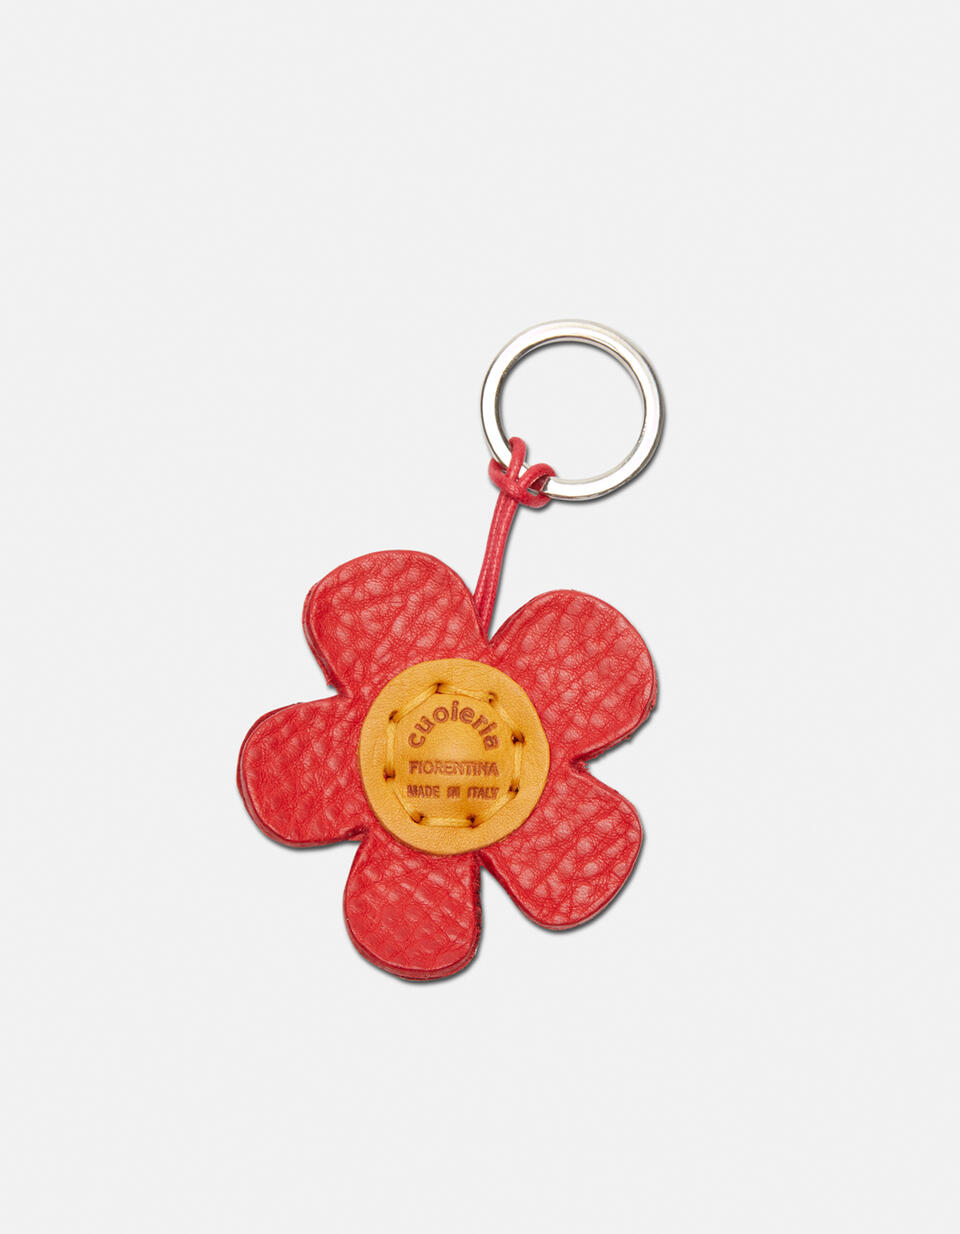 Flower leather Keychain - Key holders - Women's Accessories | Accessories  - Key holders - Women's Accessories | AccessoriesCuoieria Fiorentina